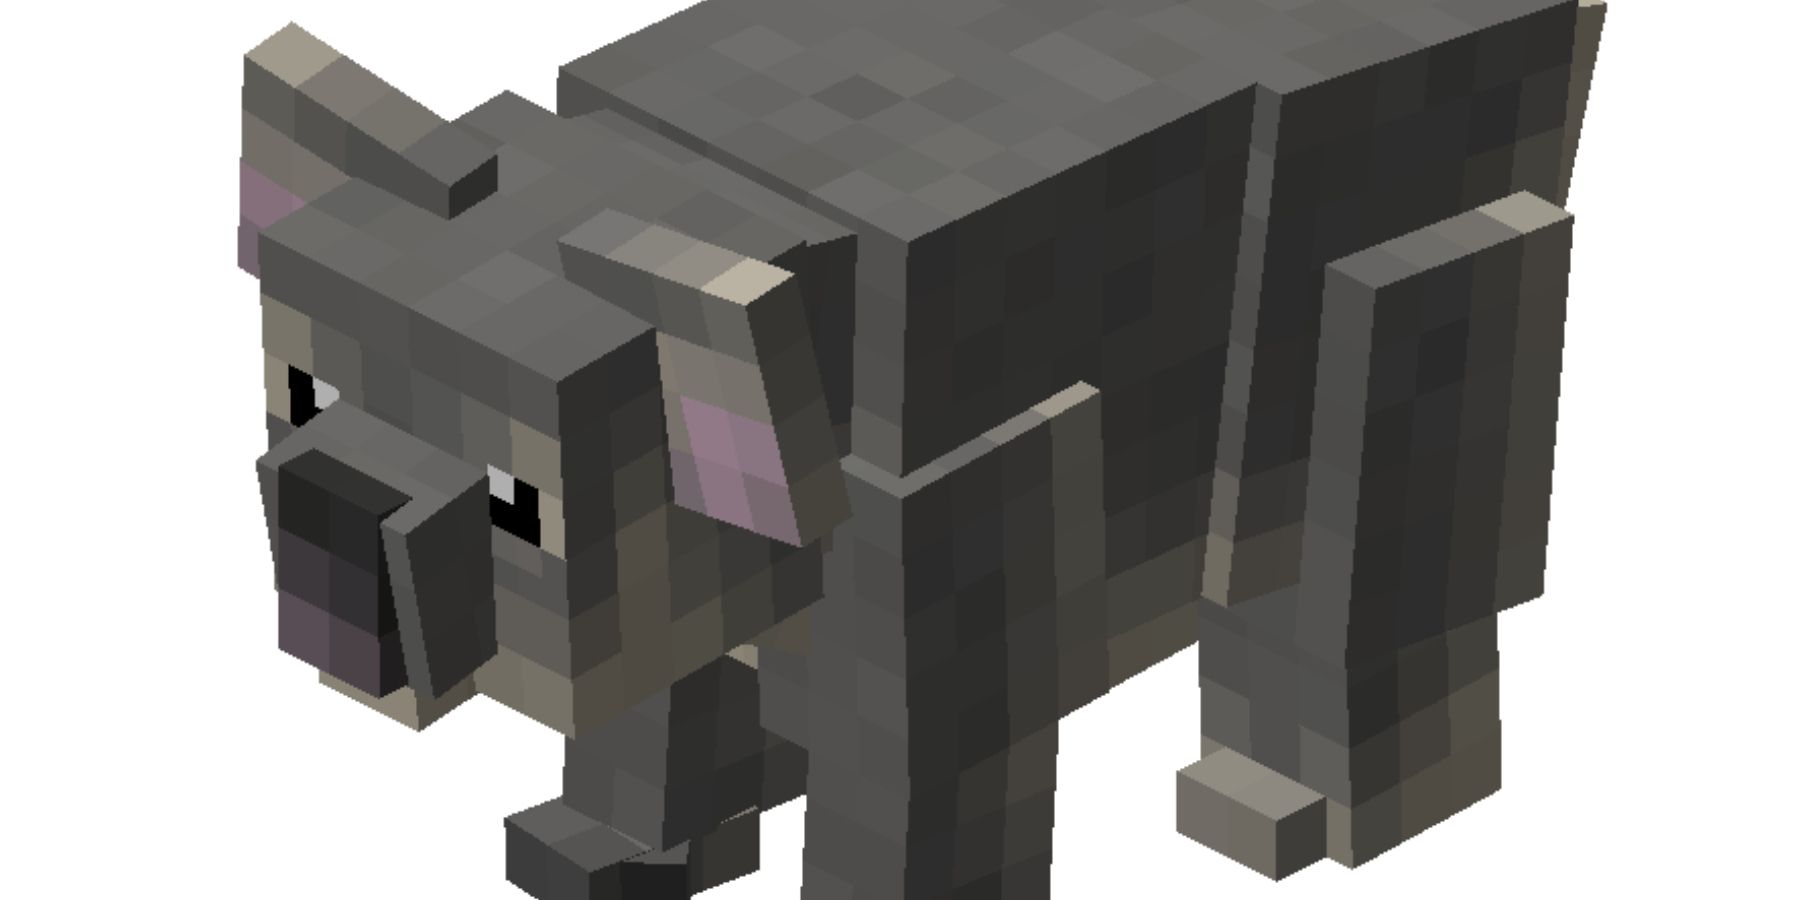 Koala concept art in Minecraft